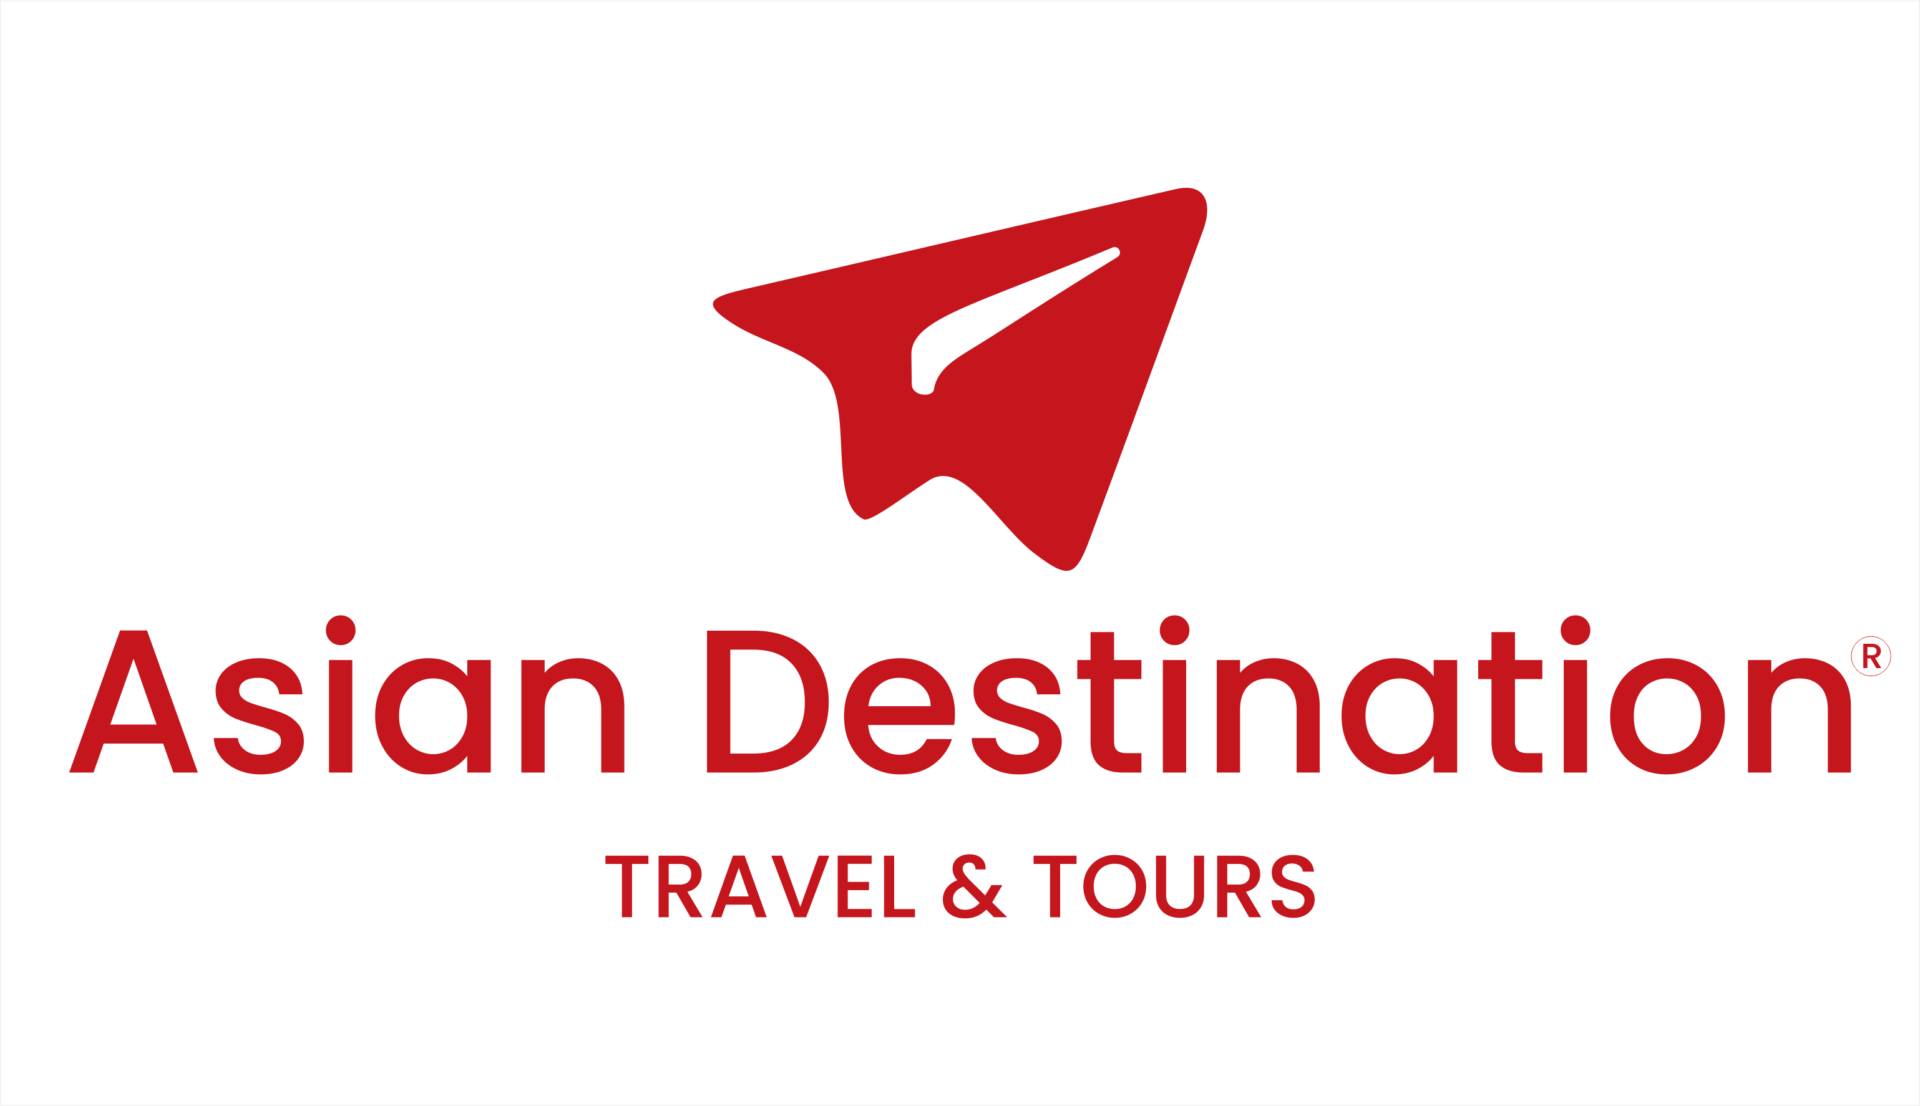 Asian Destination Travel